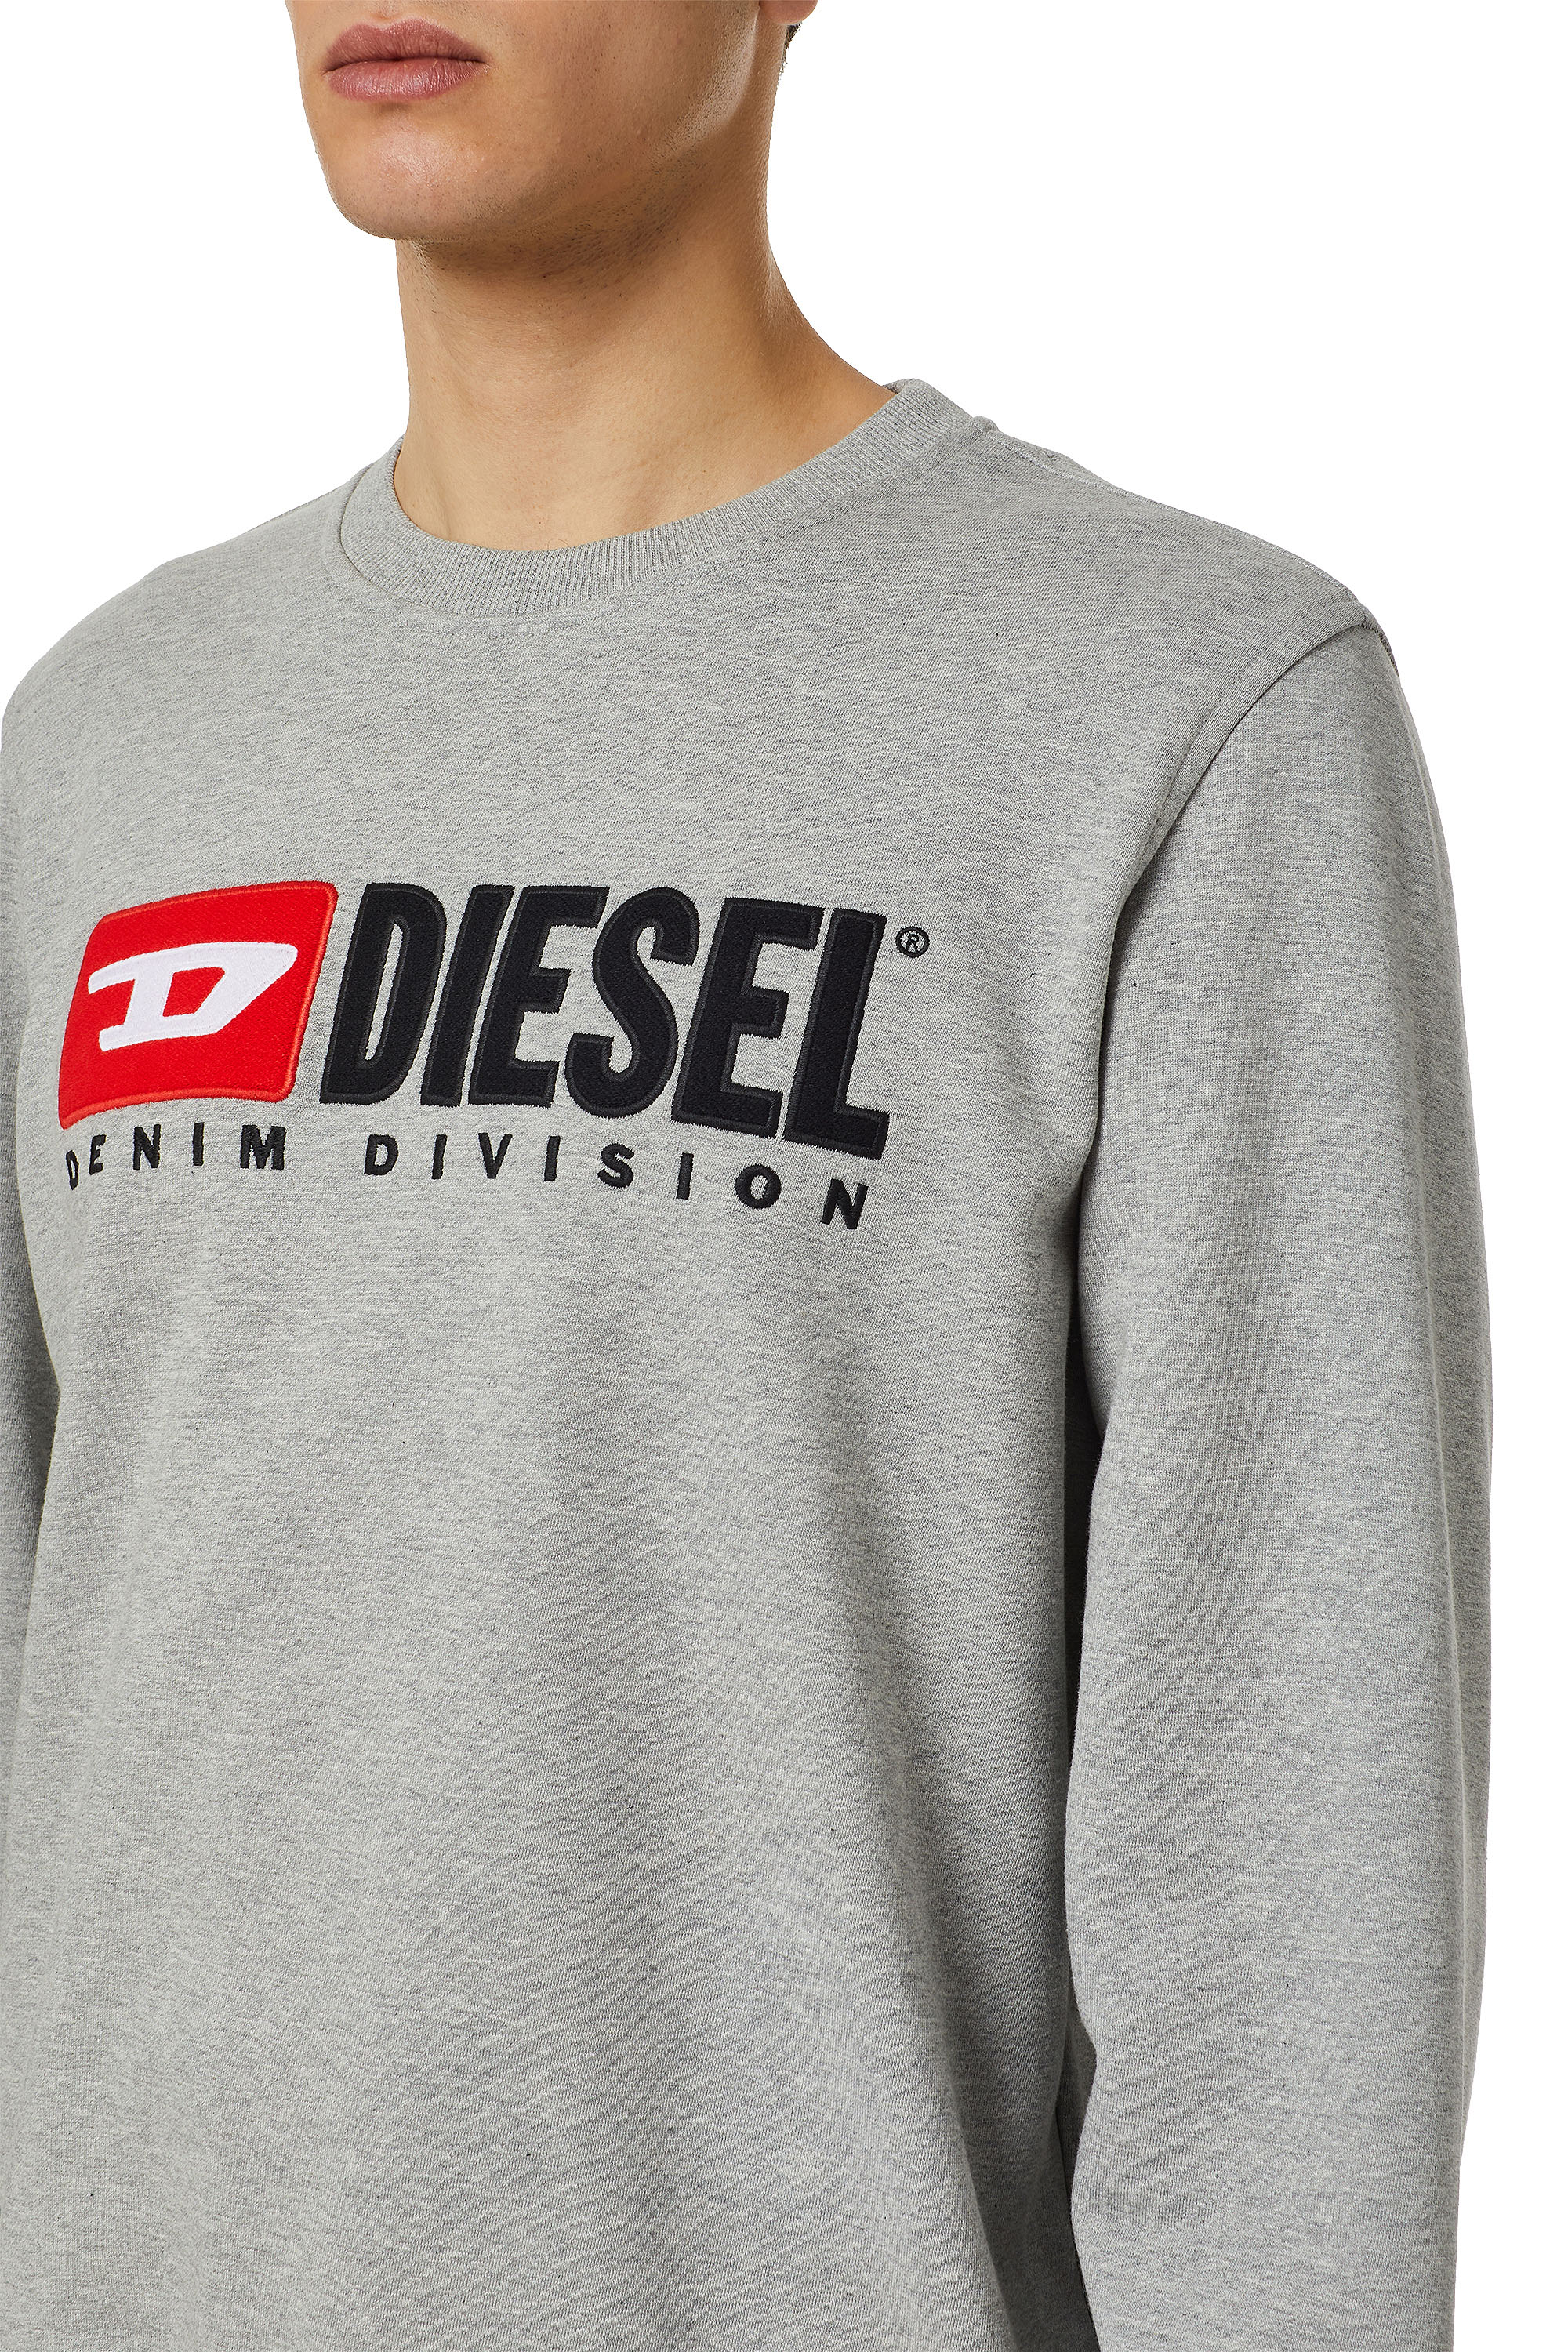 Diesel - S-GINN-DIV, Gris - Image 3